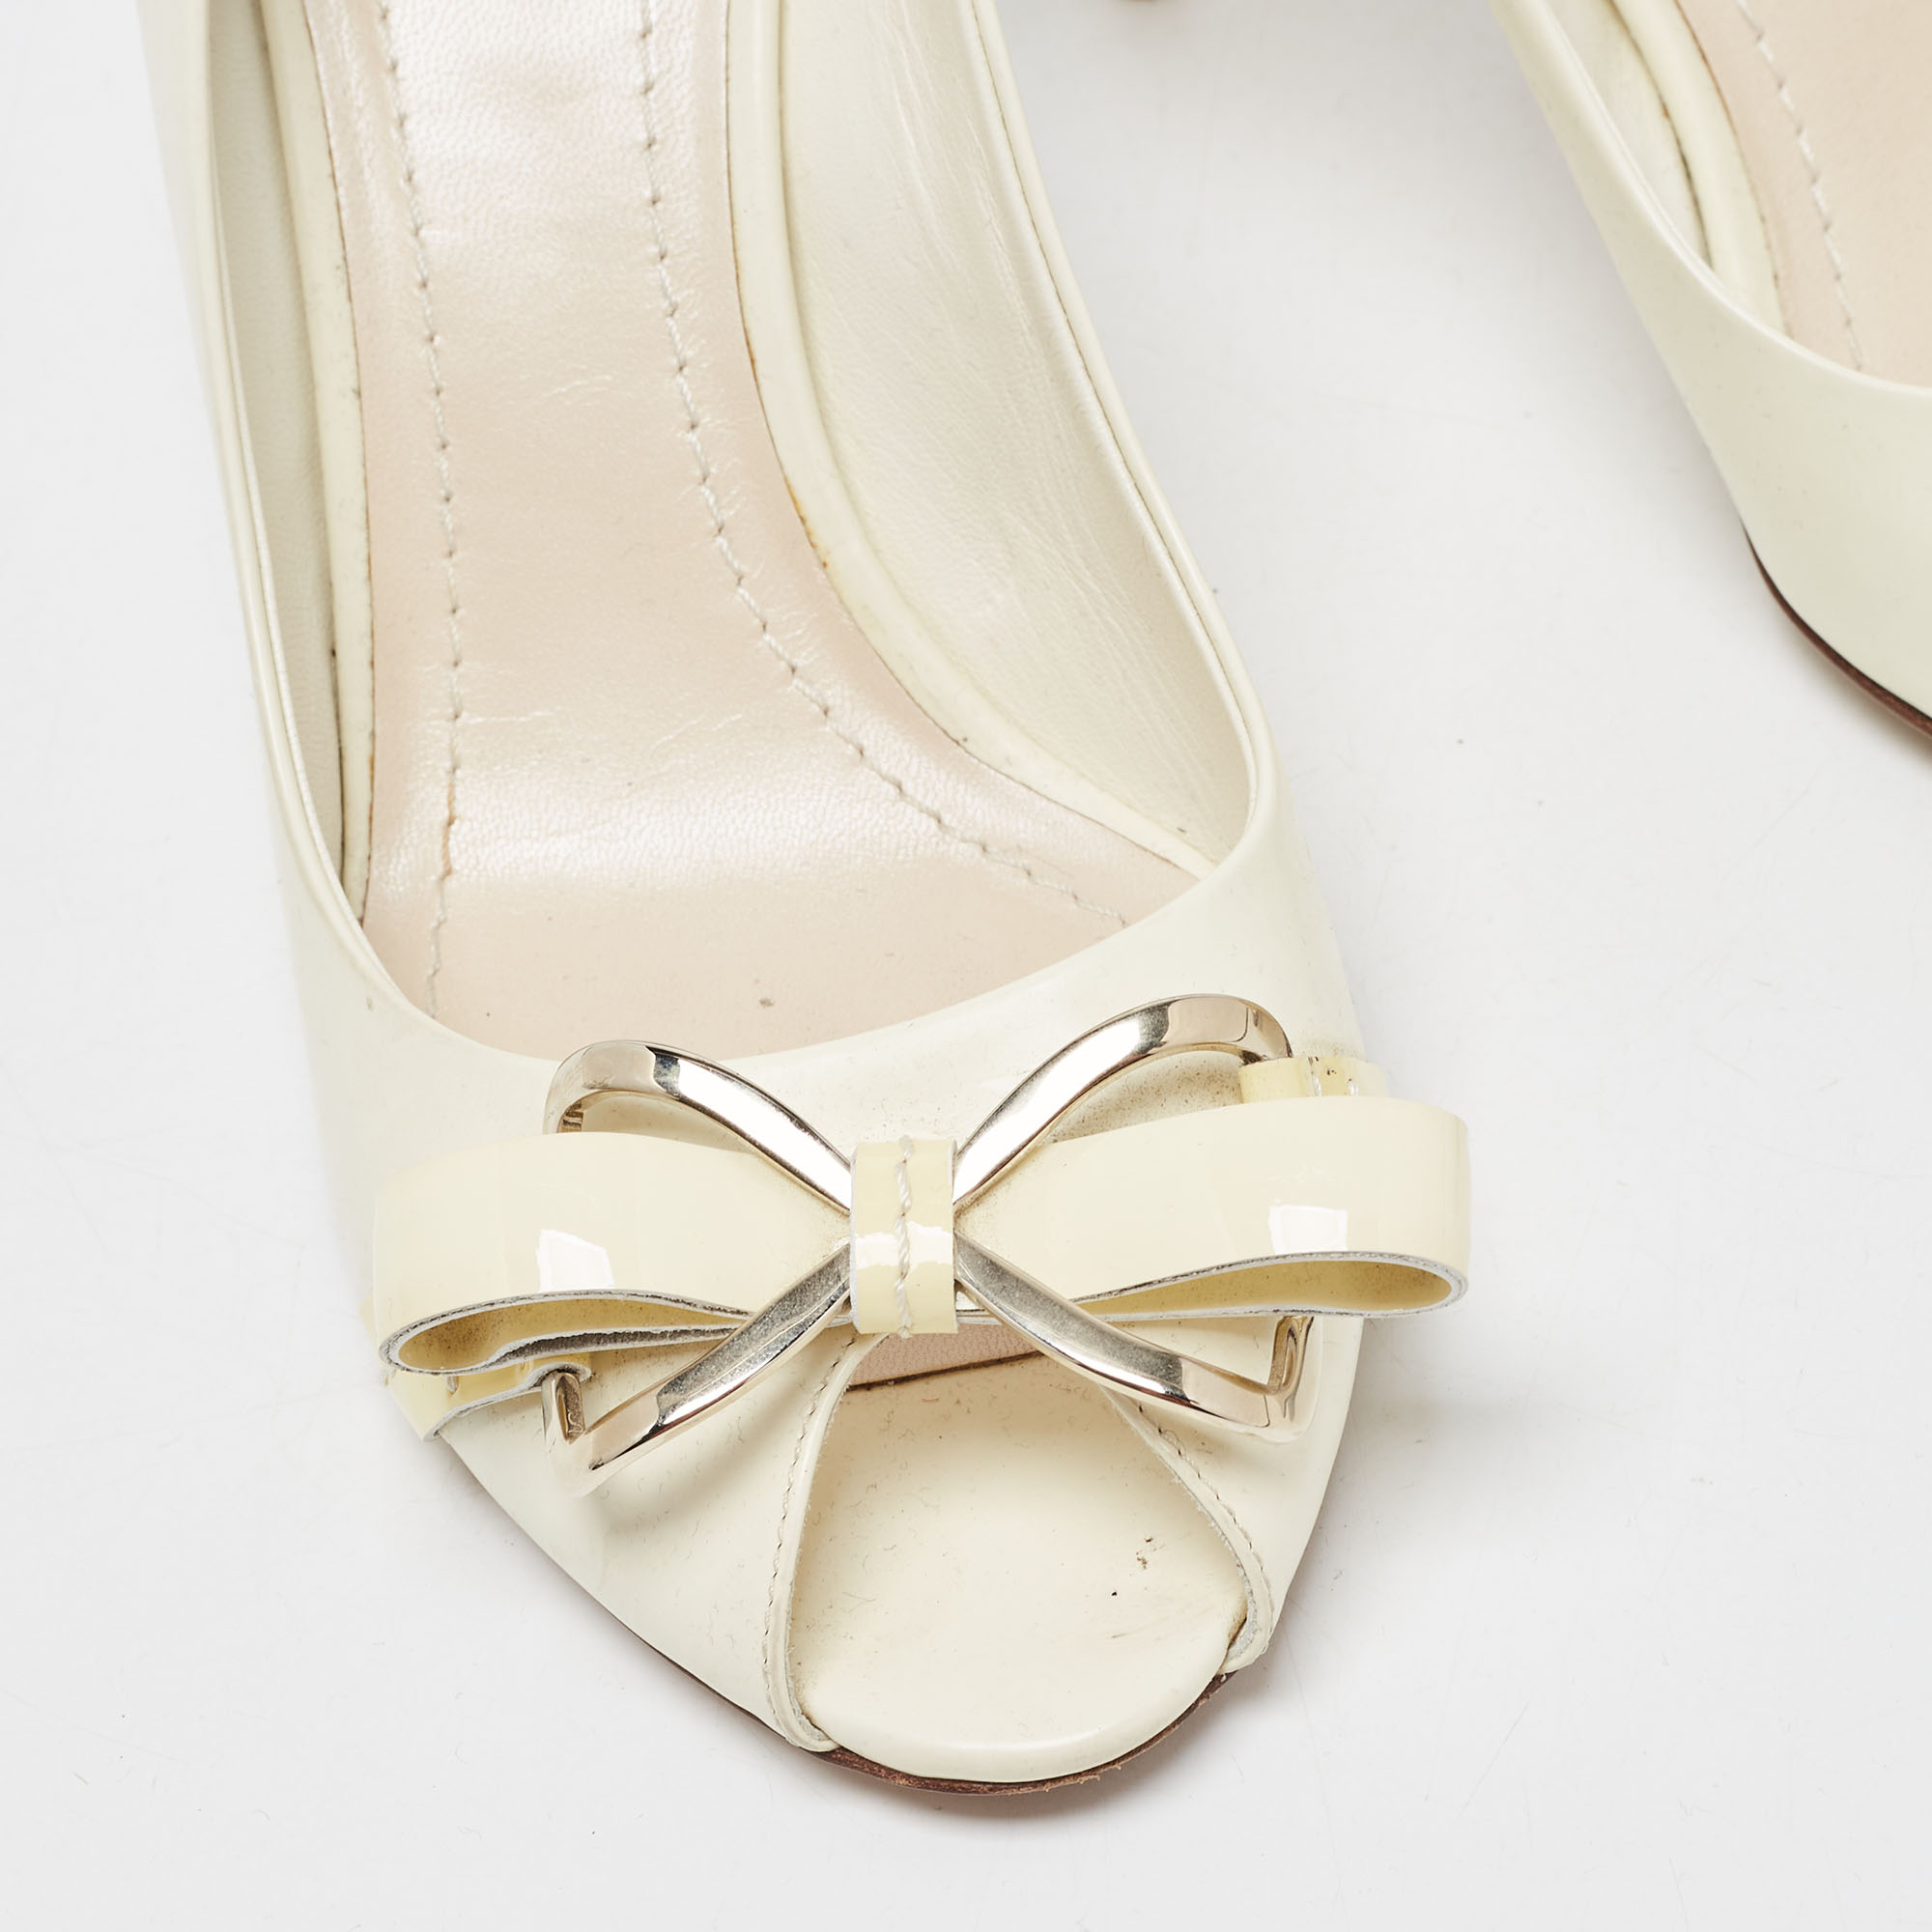 Dior Cream Patent Peep Toe Bow Pumps Size 37